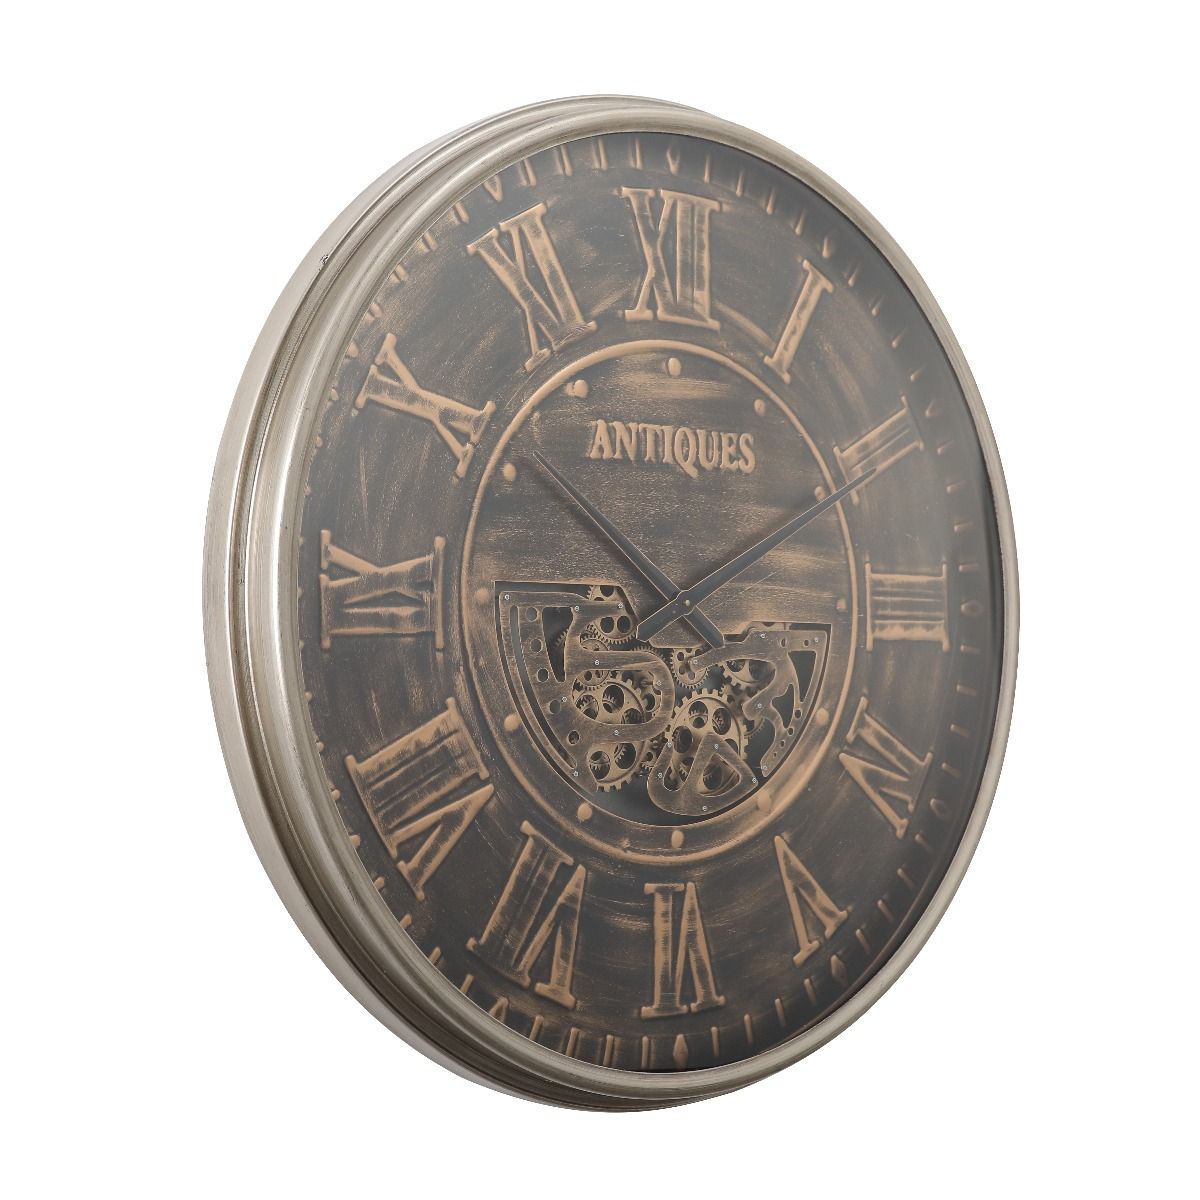 Industrial/vintage-inspired clock range - MODEL 03